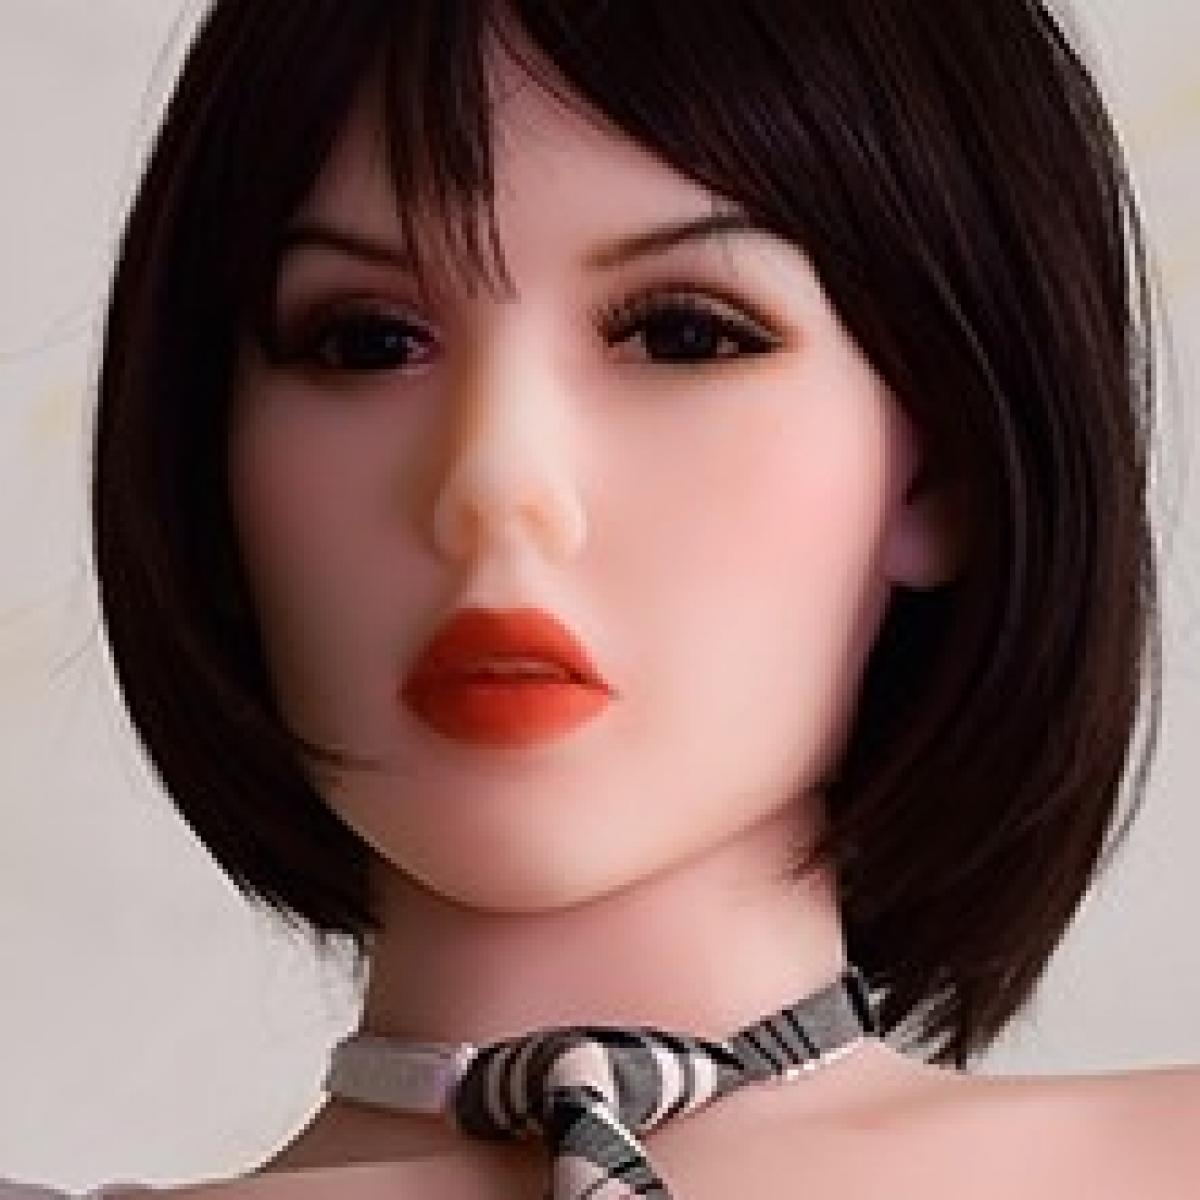 Allure 82 Head - Sex Doll Head - M16 Compatible - Natural